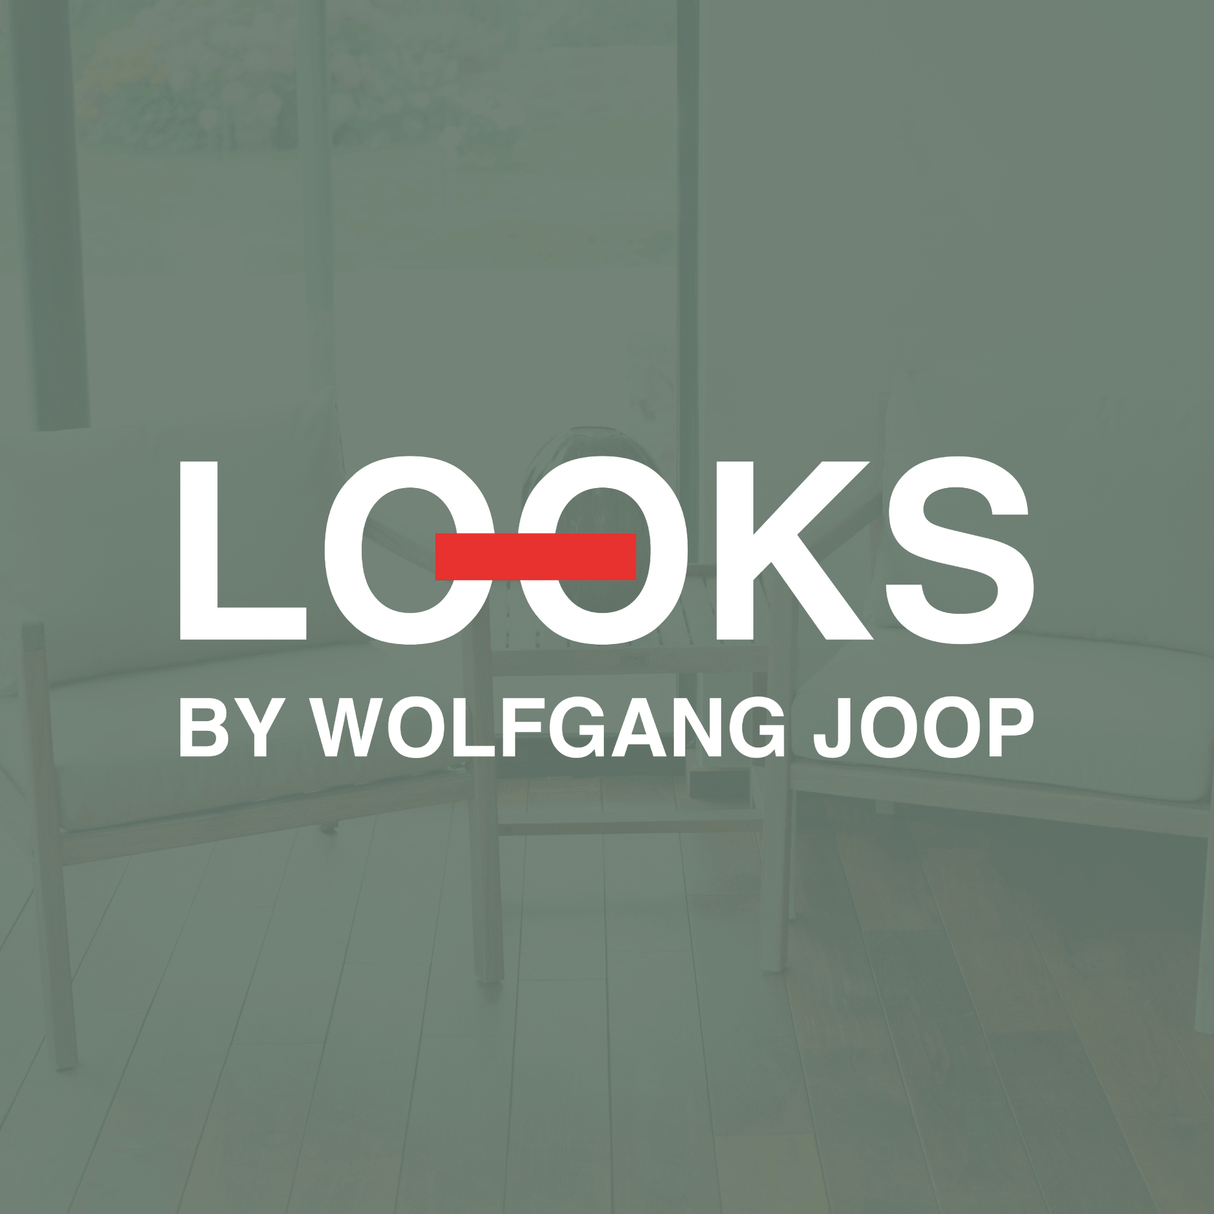 LOOKS by Wolfgang Joop Kissenbezüge für Lounge 2-er Set Cozy in Beige